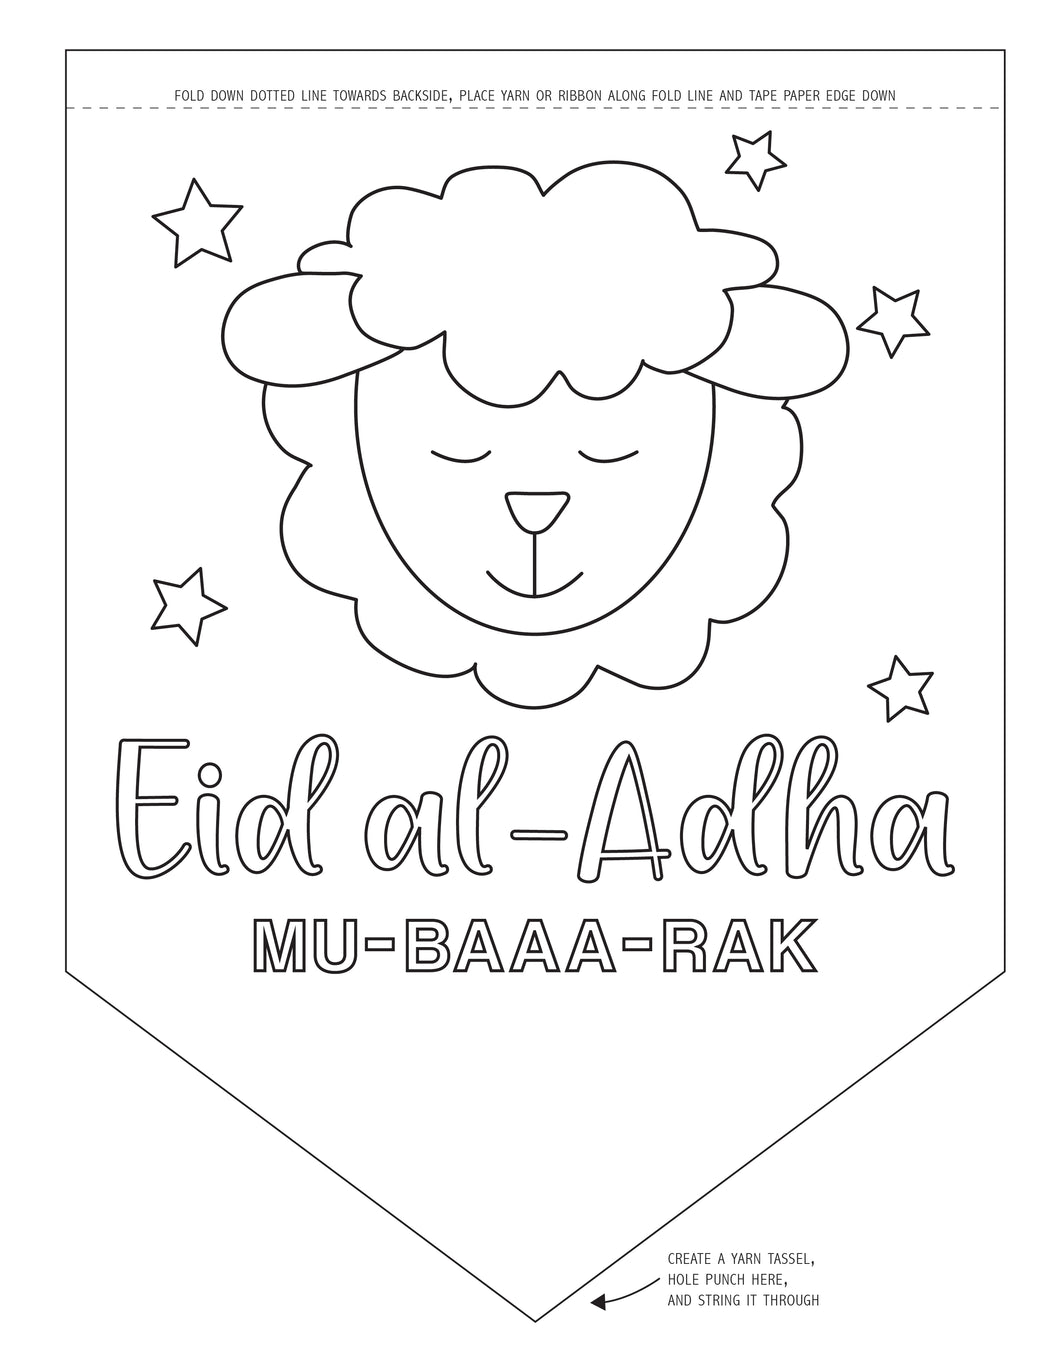 Eid al-Adha Sheep Banner